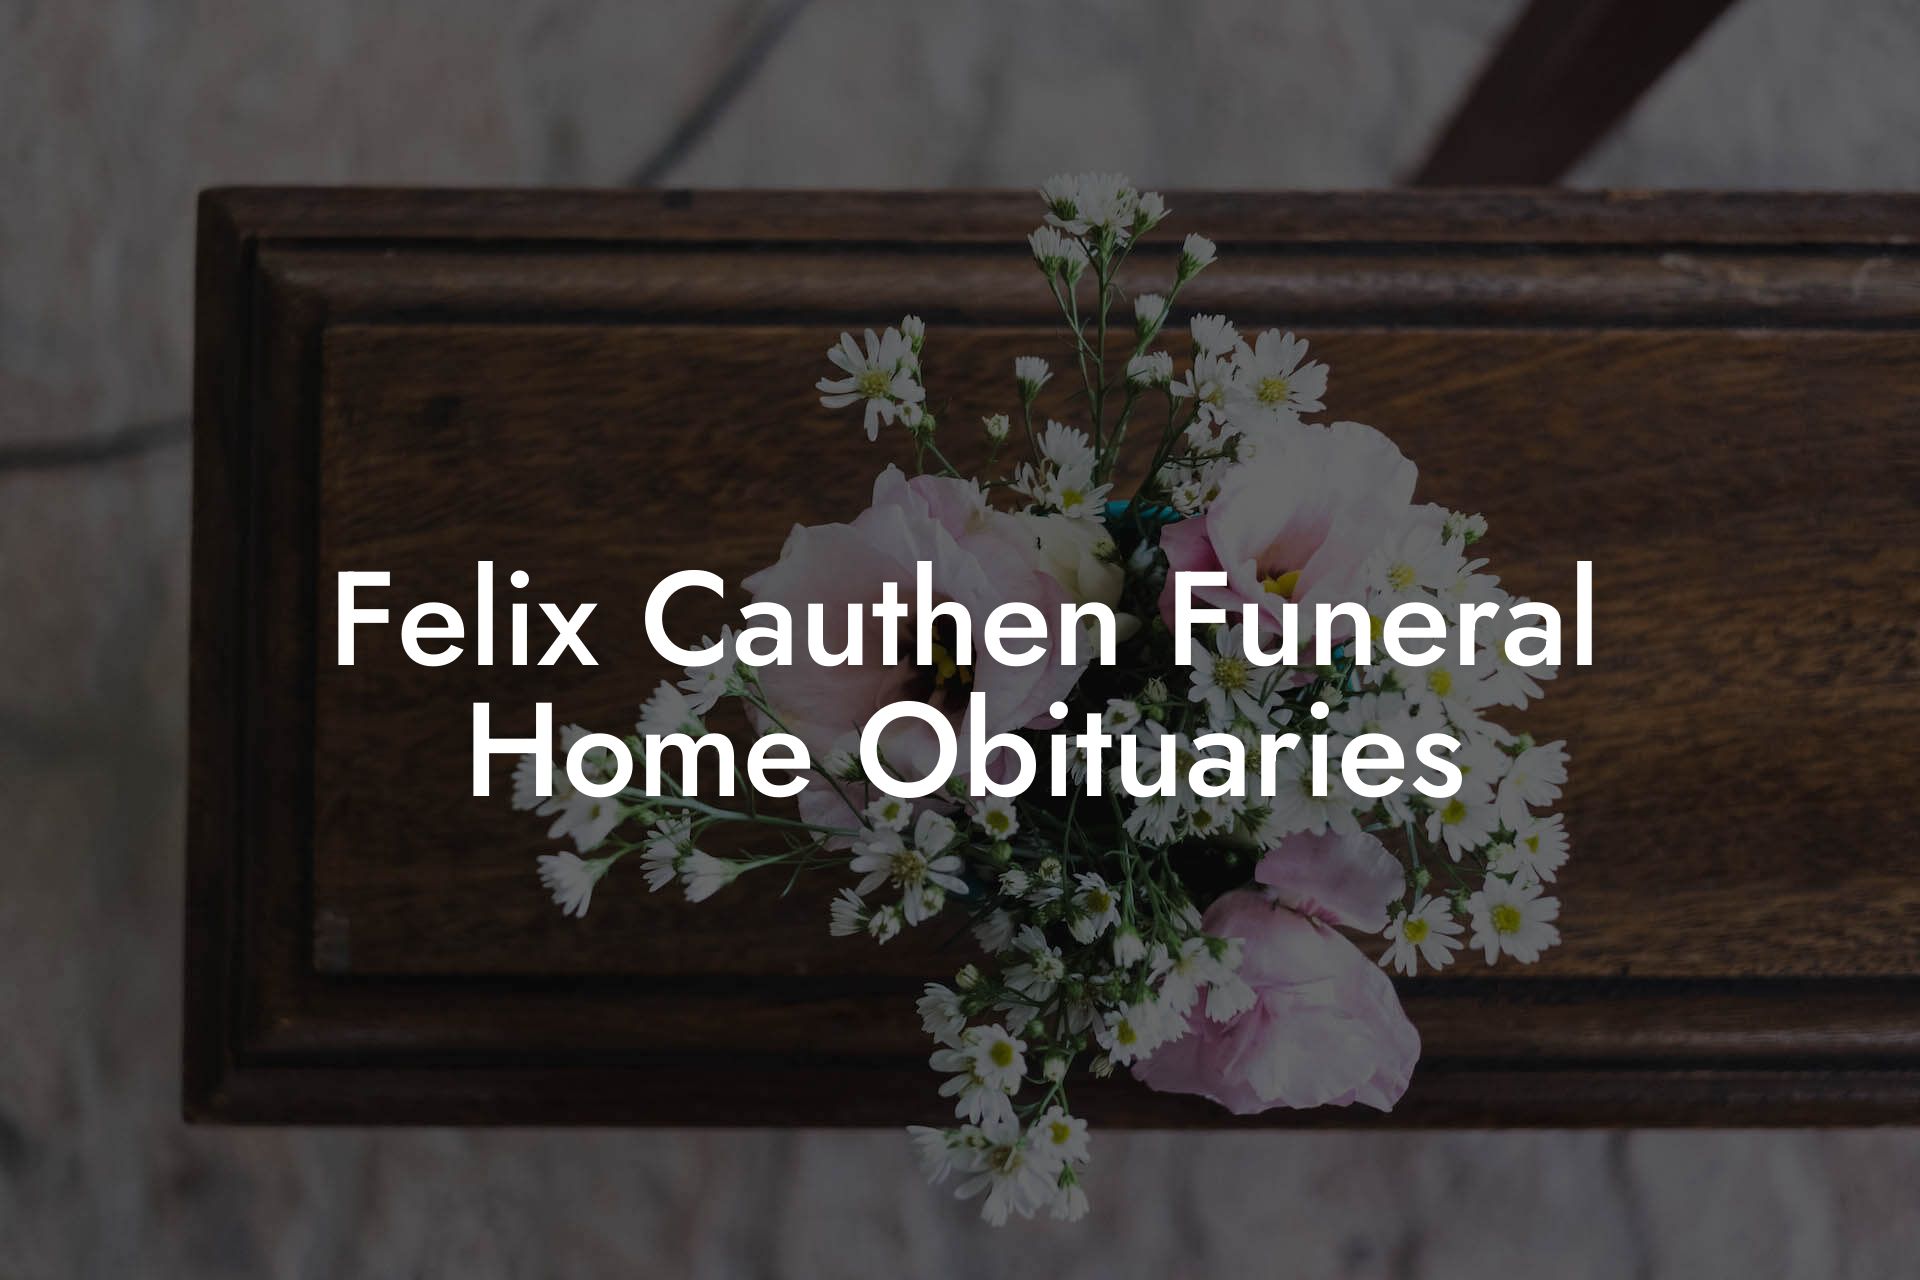 Felix Cauthen Funeral Home Obituaries